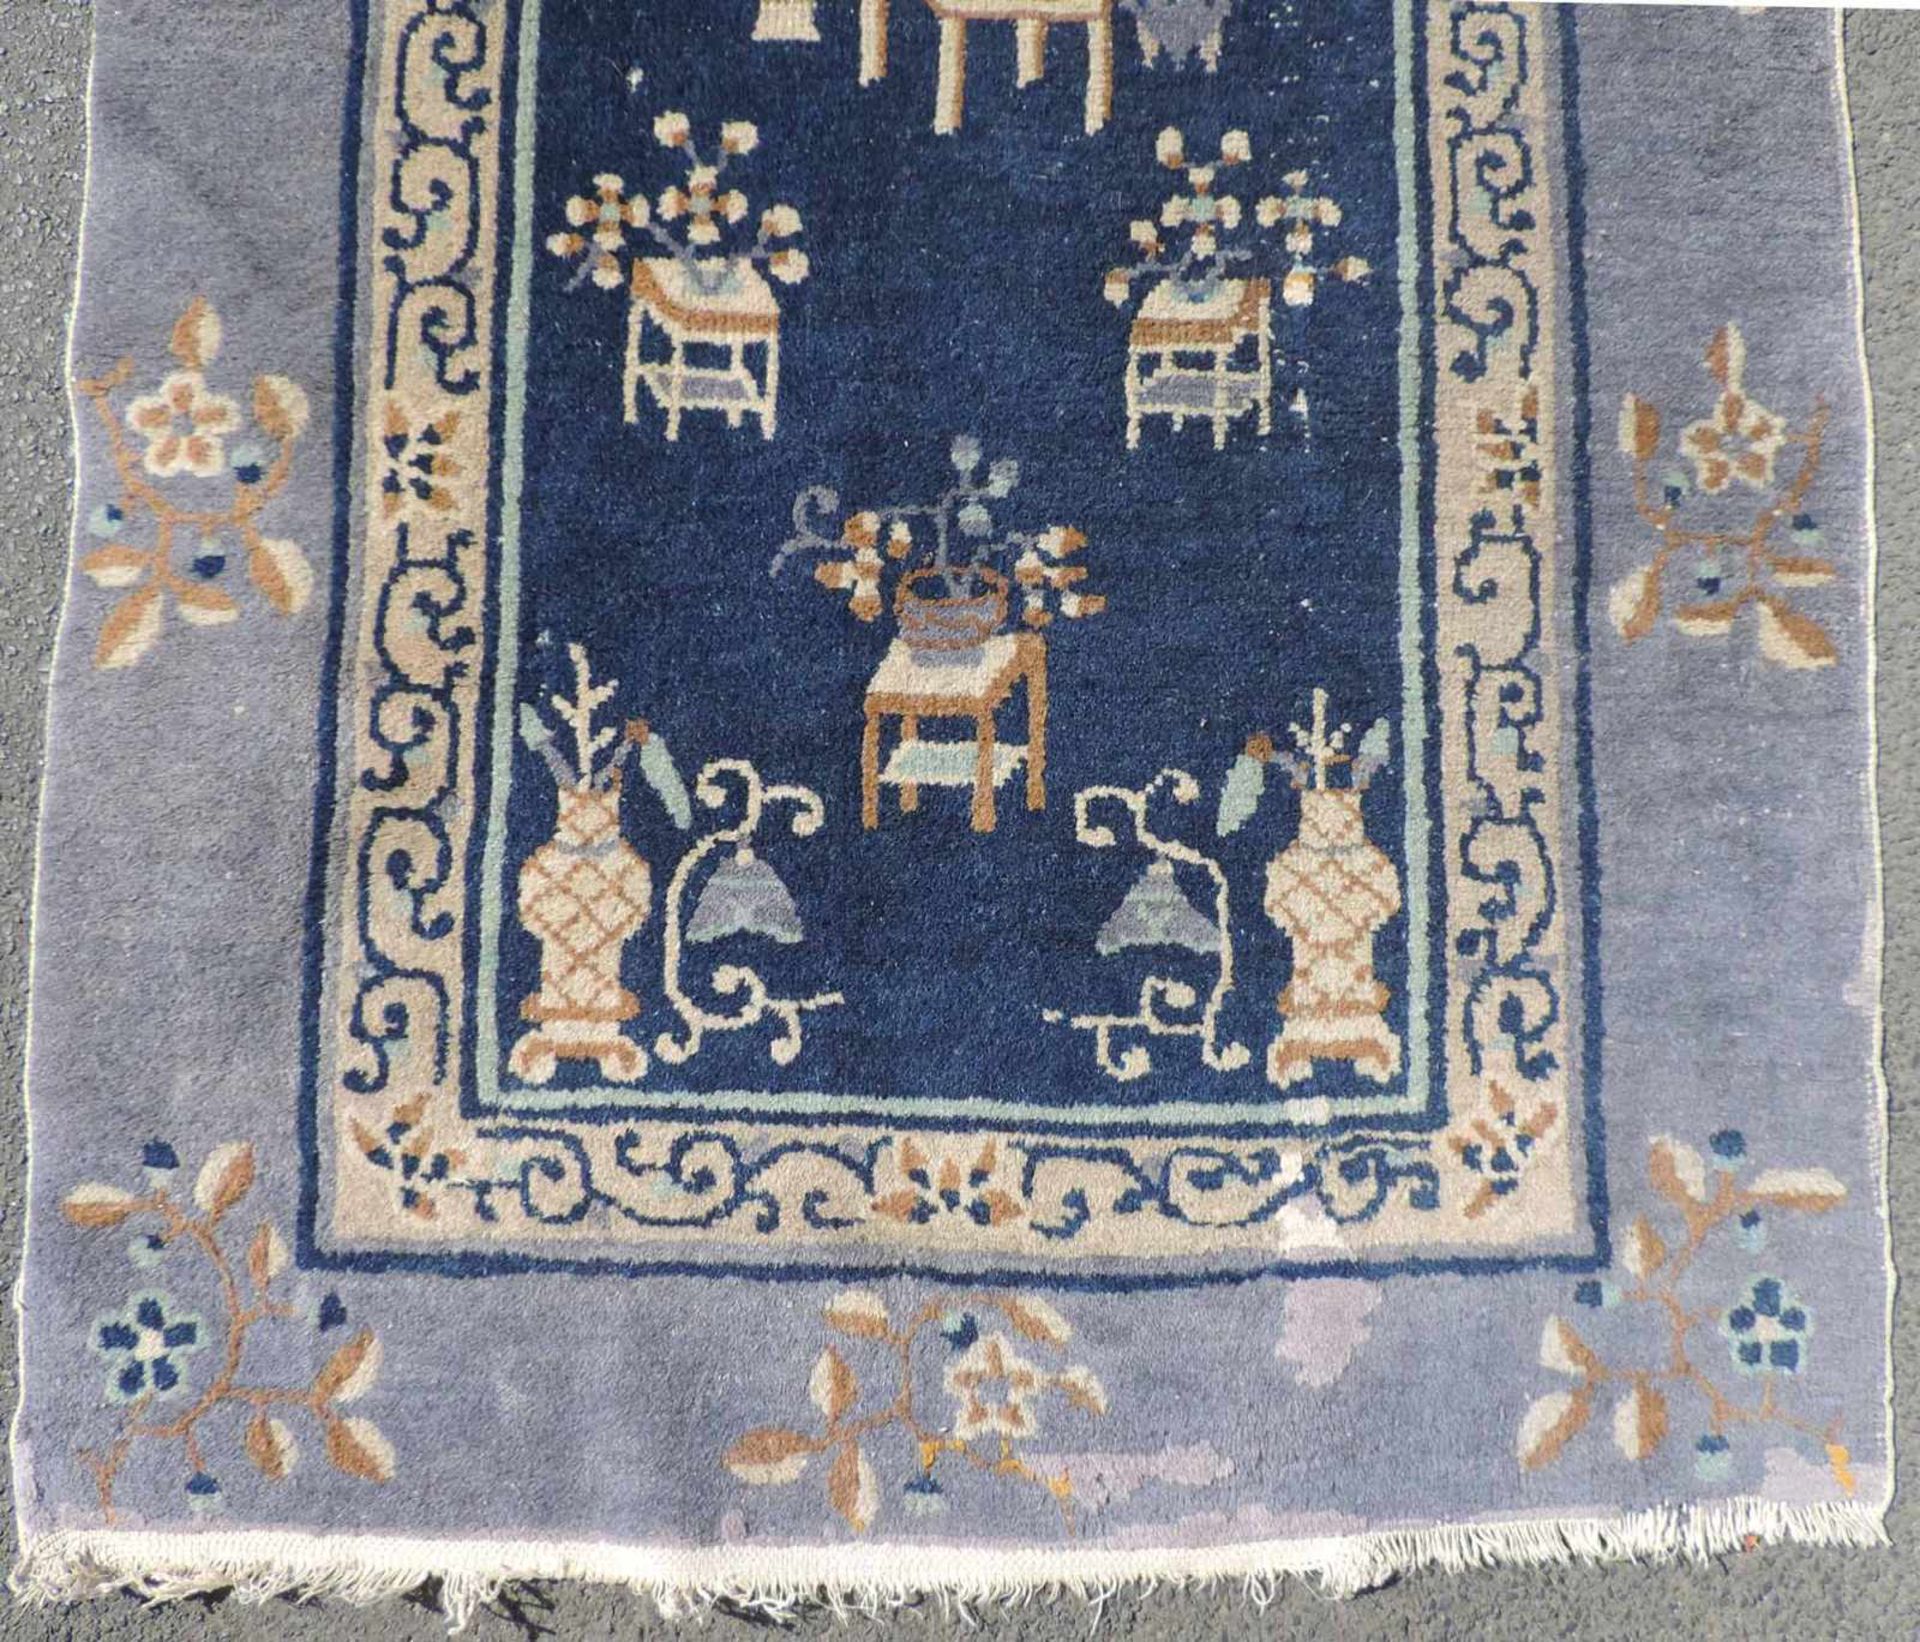 Pau Tou Teppich China, antik, Ende 19. Jahrhundert. 180 cm x 93 cm. Handgeknüpft. Wolle auf - Bild 2 aus 7